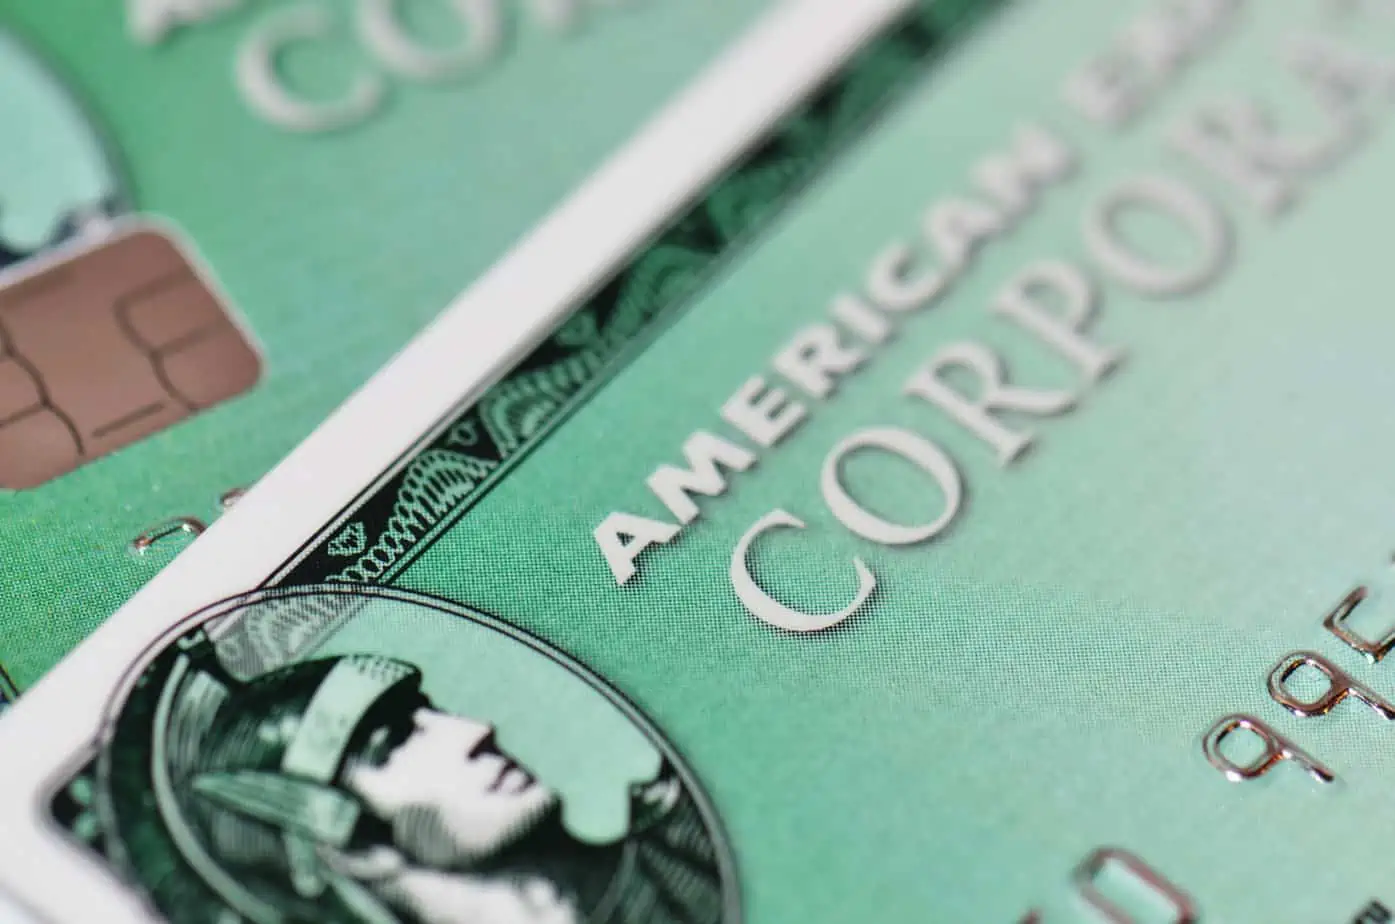 American Express Fraud Liability Shift